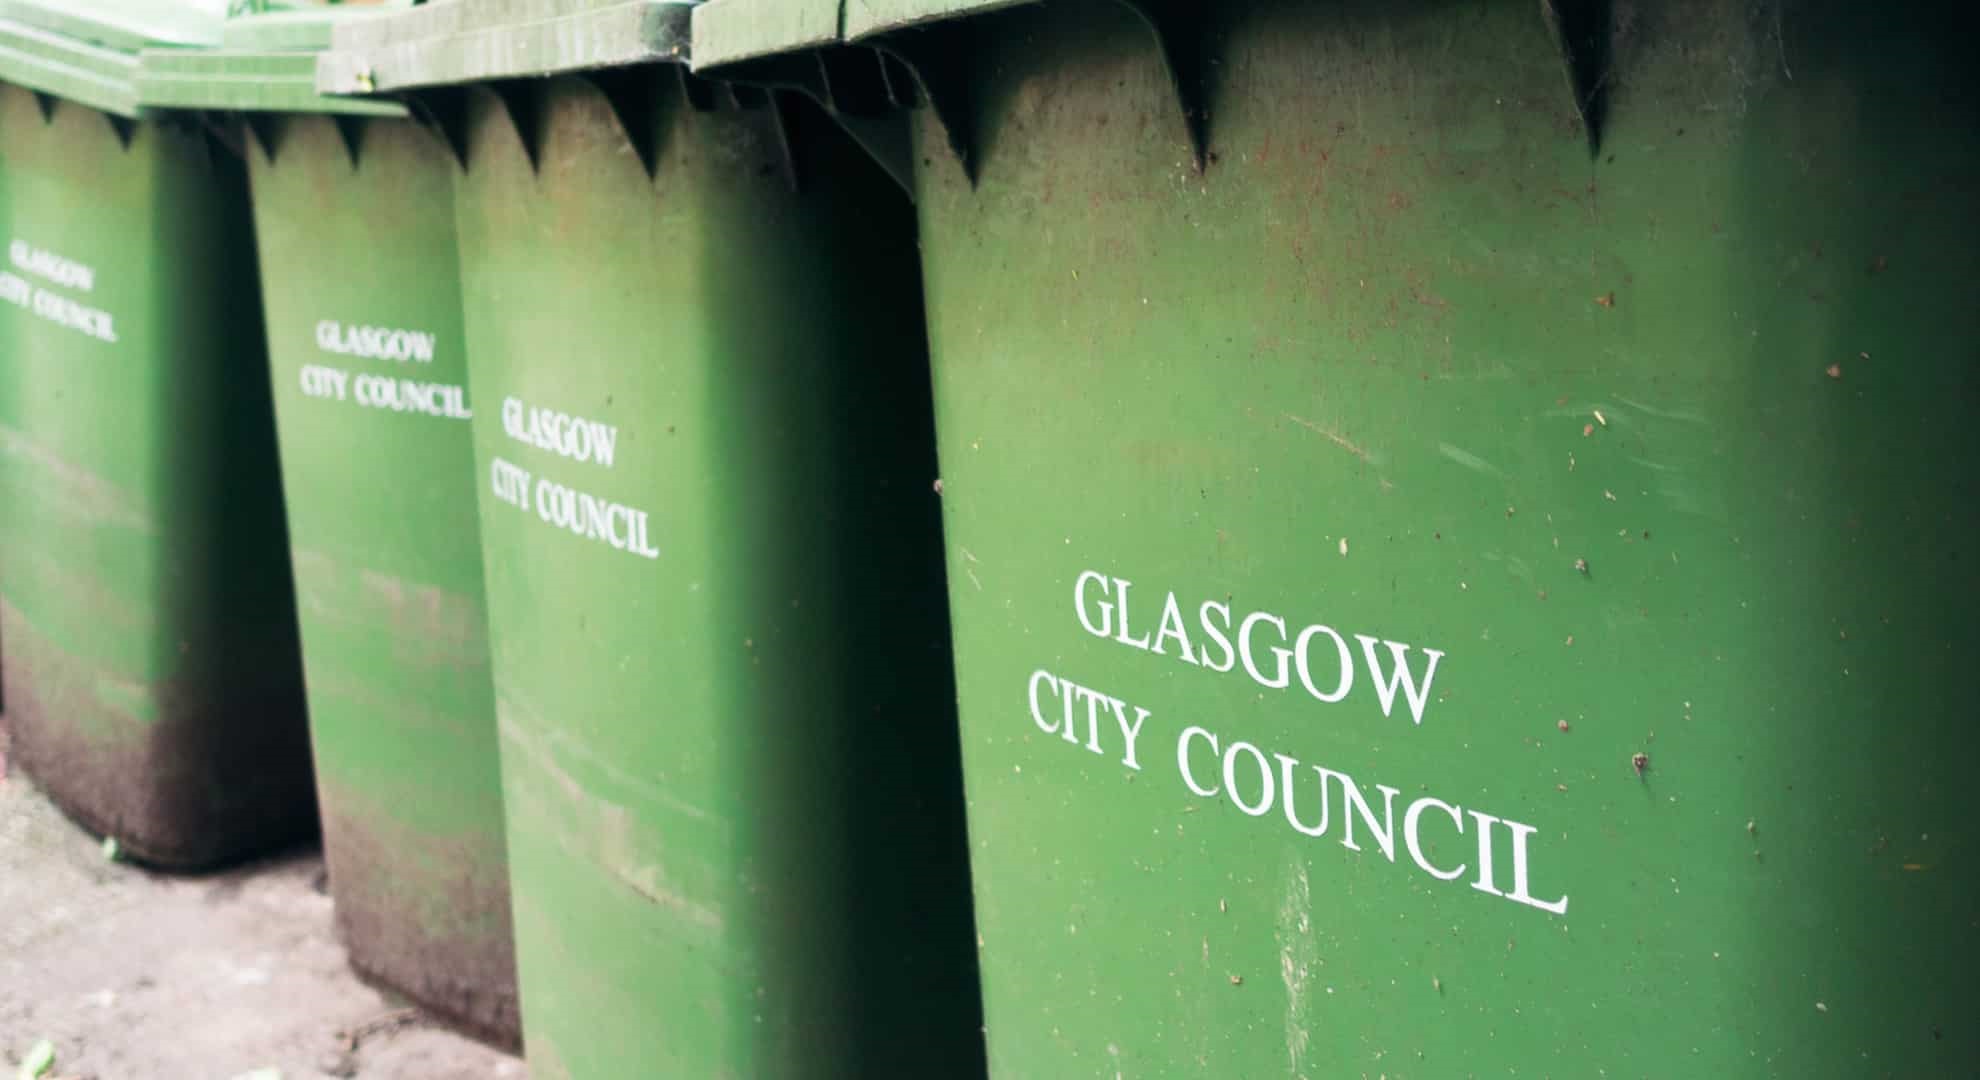 Wheelybins provided by Glasgow City Council 